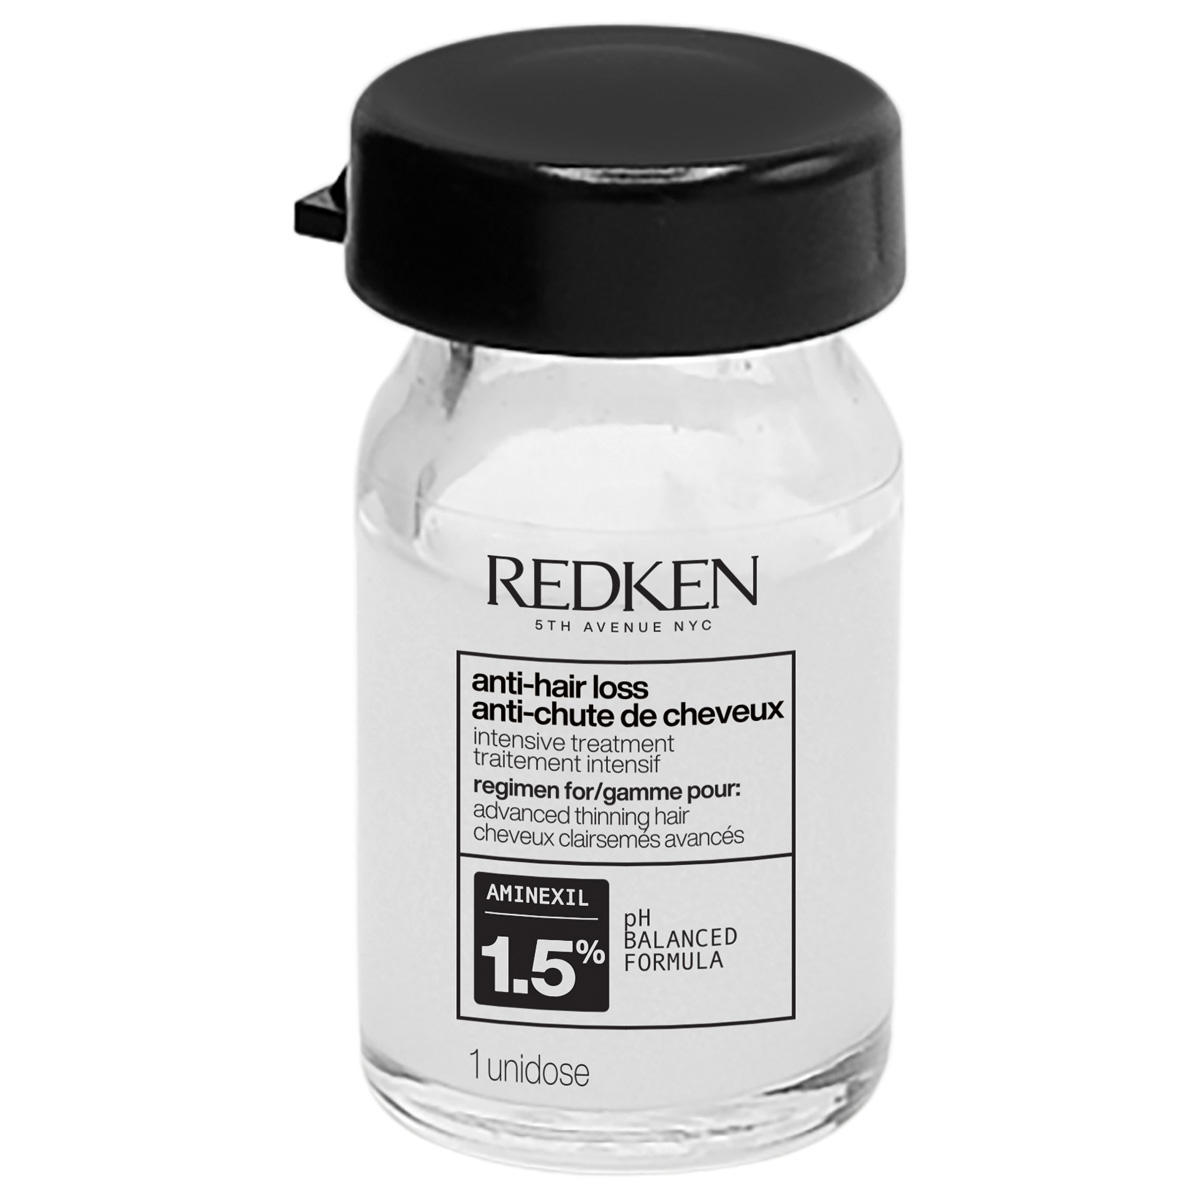 Redken cerafill maximize anti-hair loss intensive treatment Verpakking met 10 x 6 ml - 2